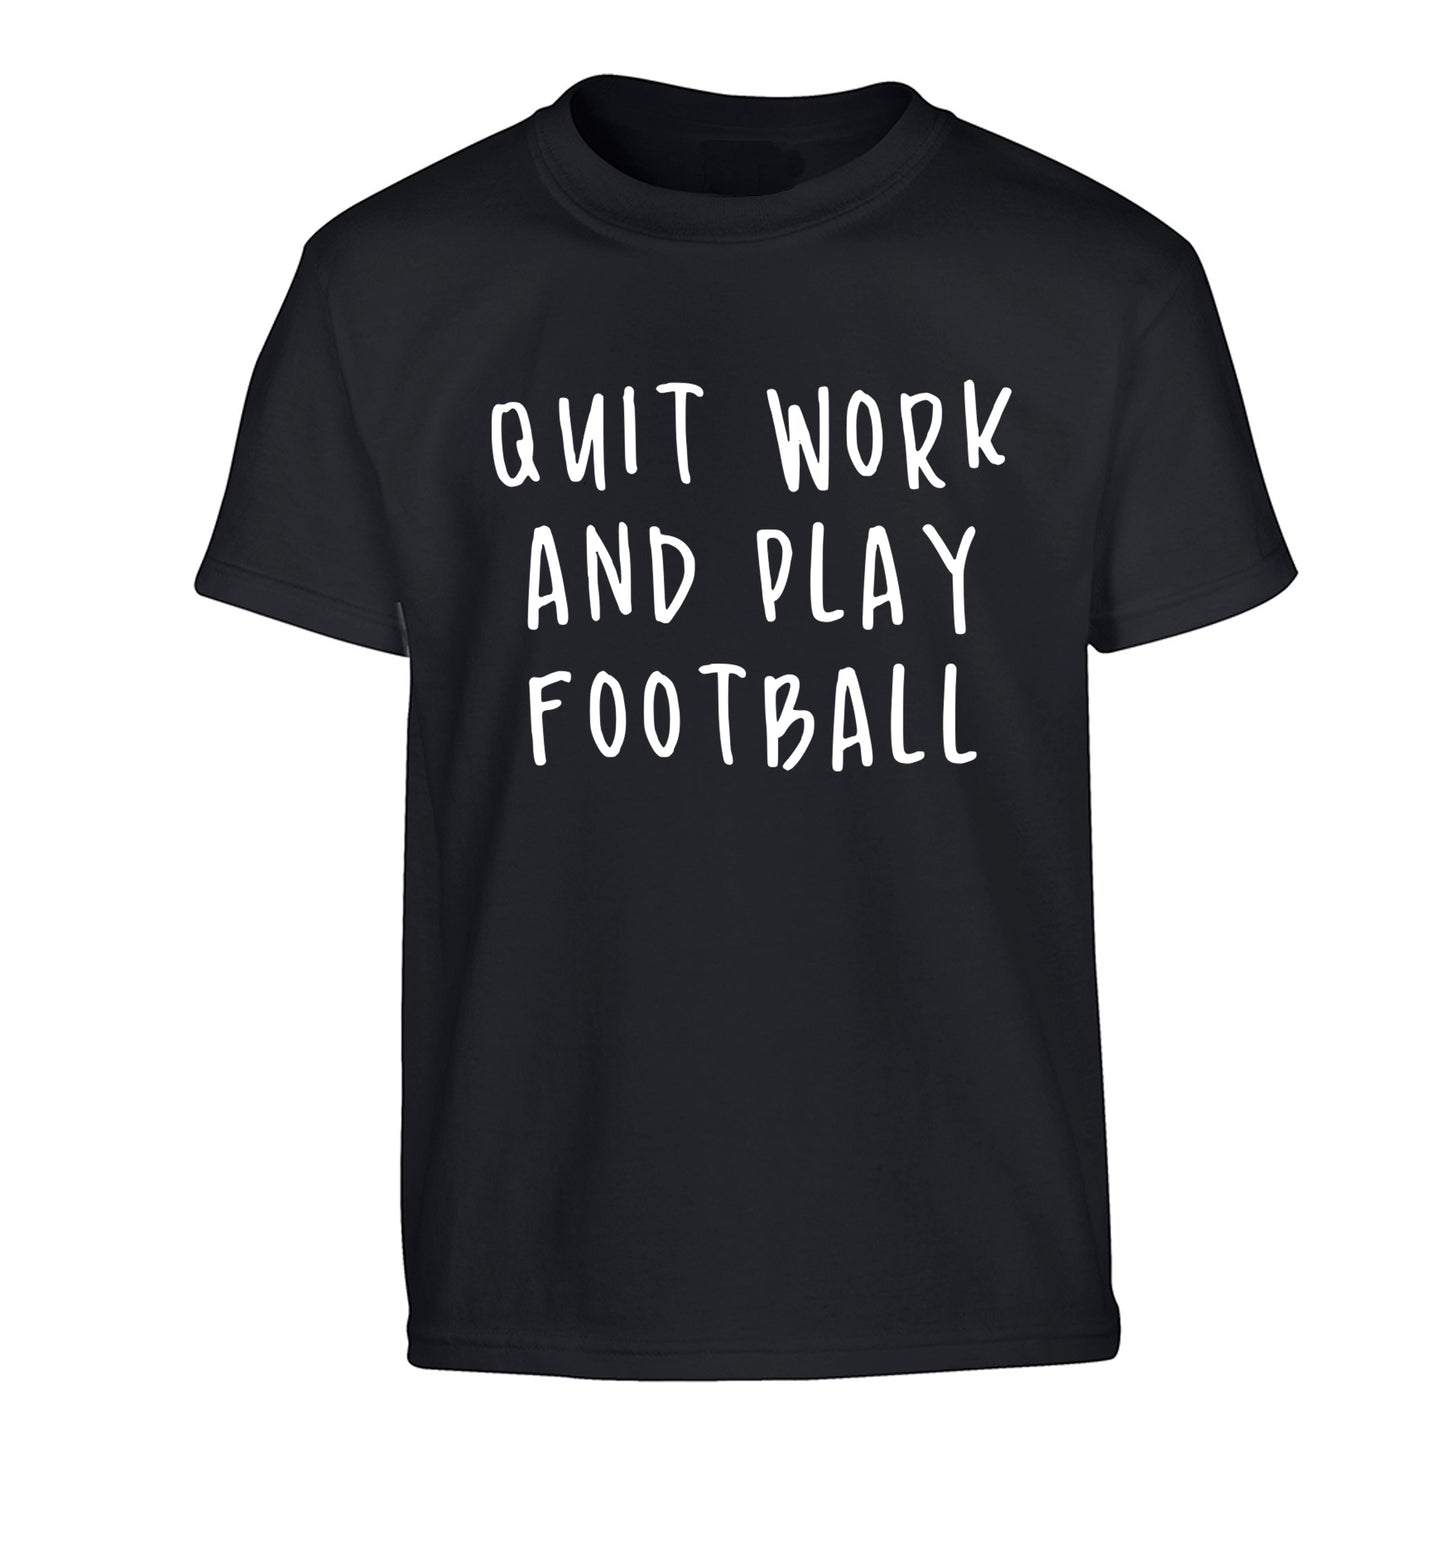 Quit work play football Children's black Tshirt 12-14 Years